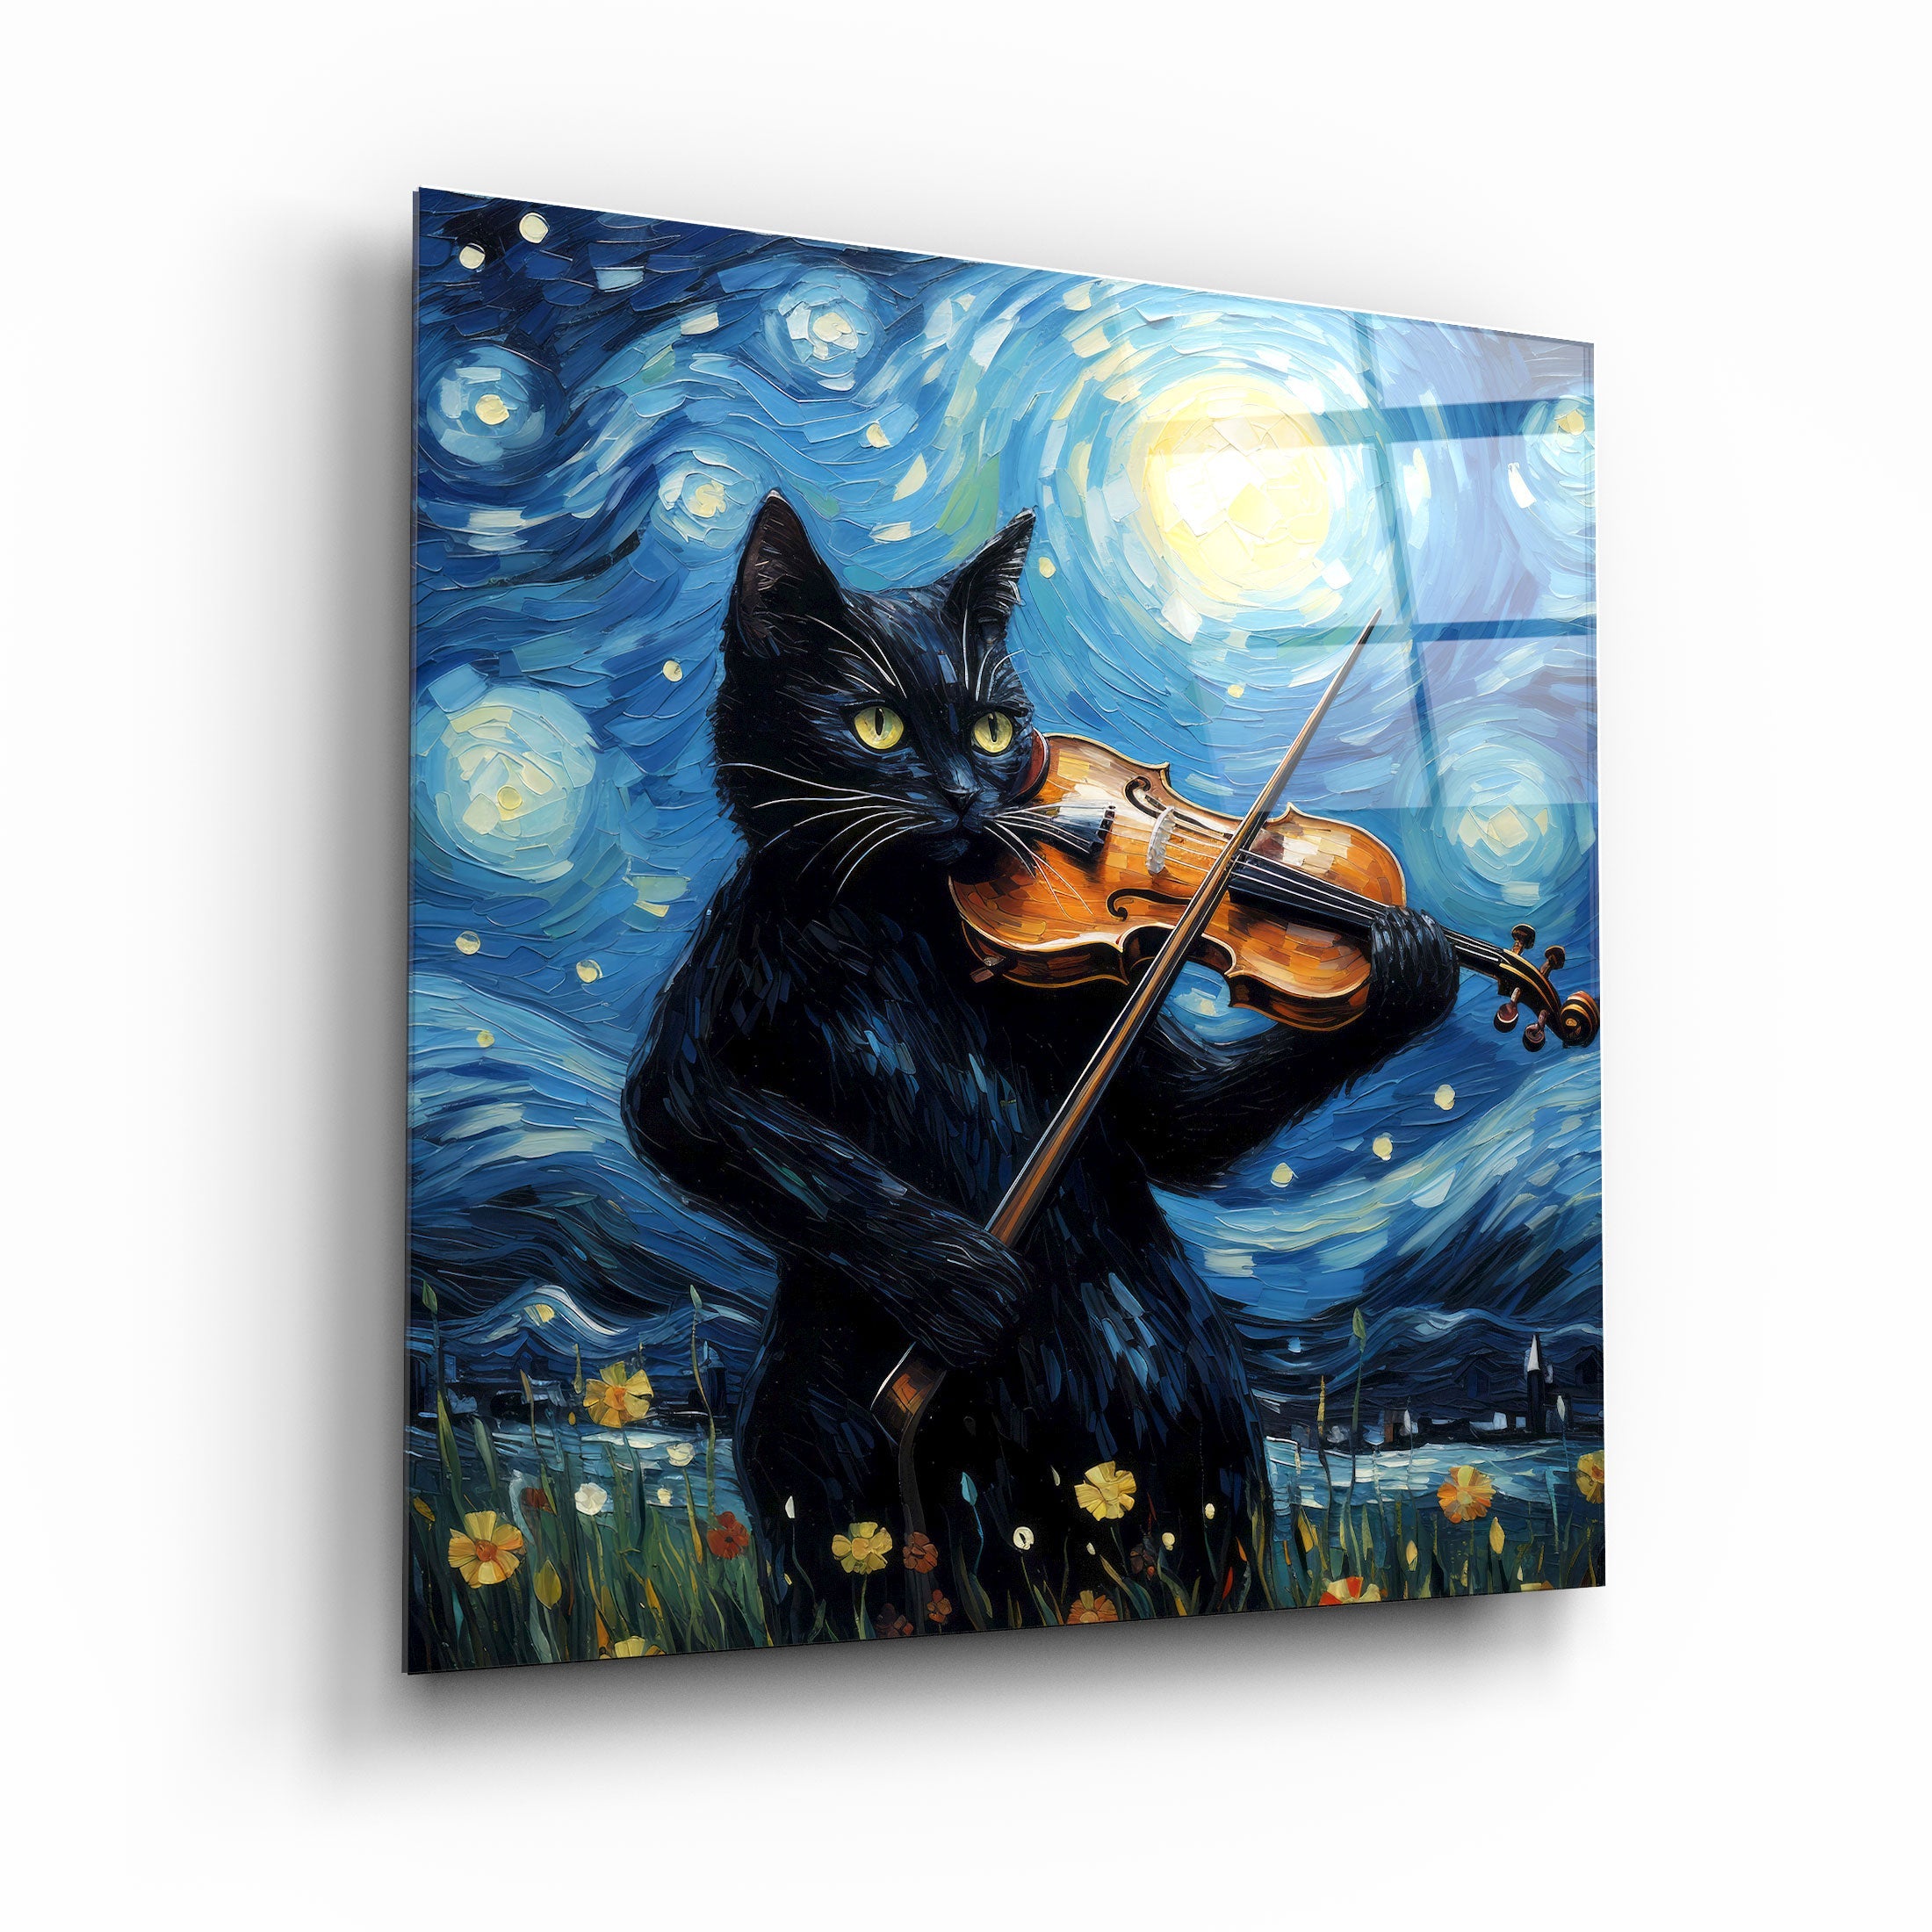 "Le chat de Van Gogh". Art mural en verre de la collection Designers